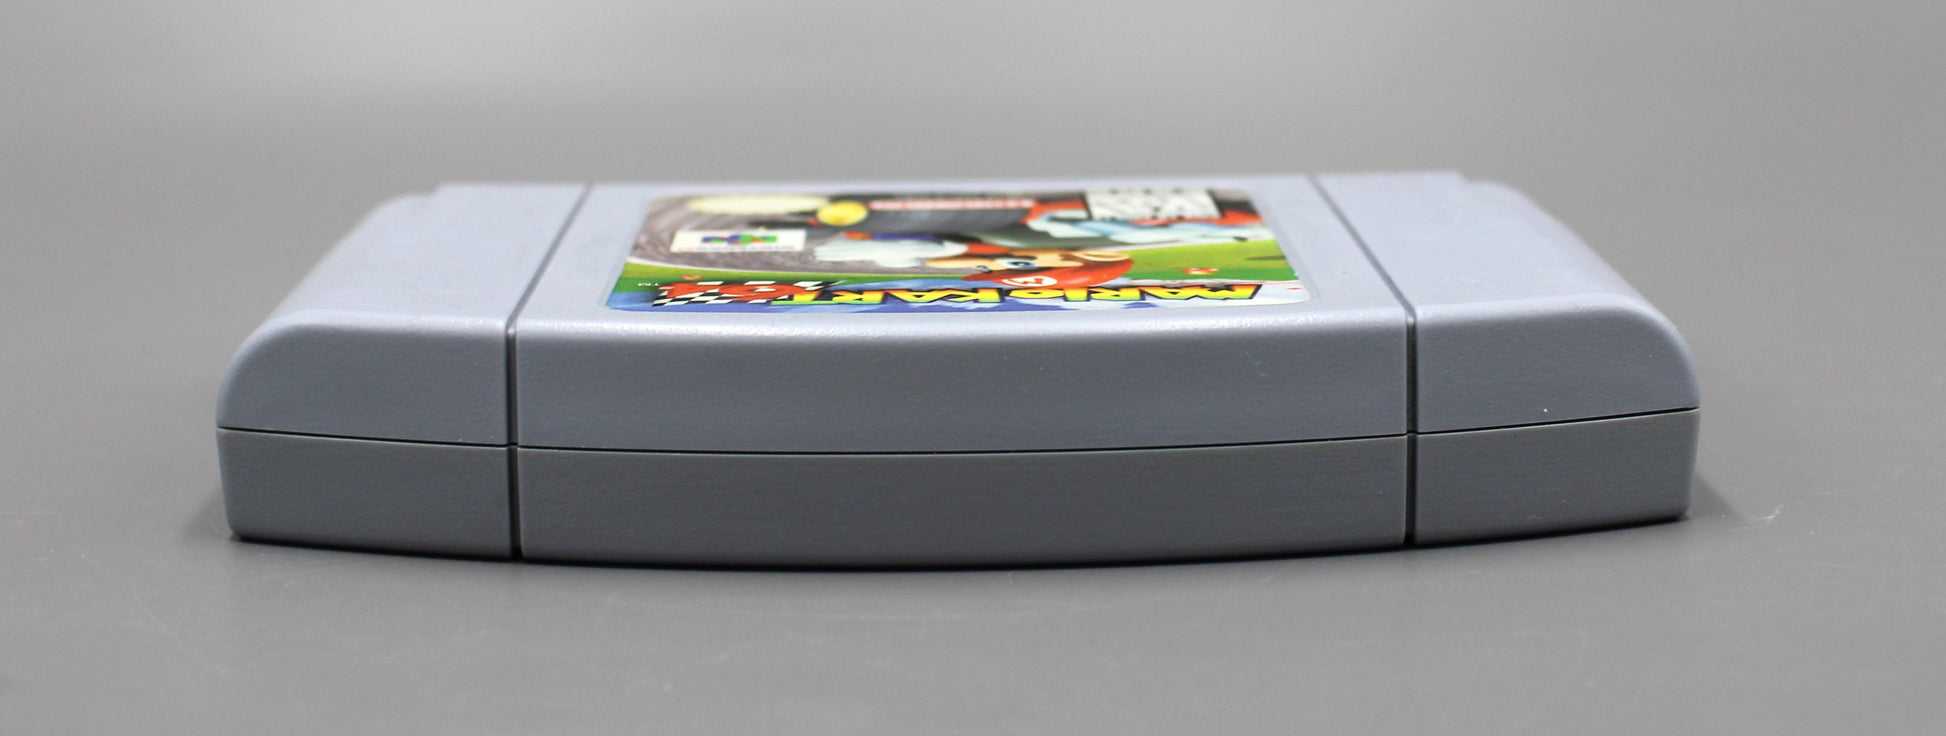 Mario Kart 64 (Nintendo 64) Authentic N64 Game Cartridge - Original Release